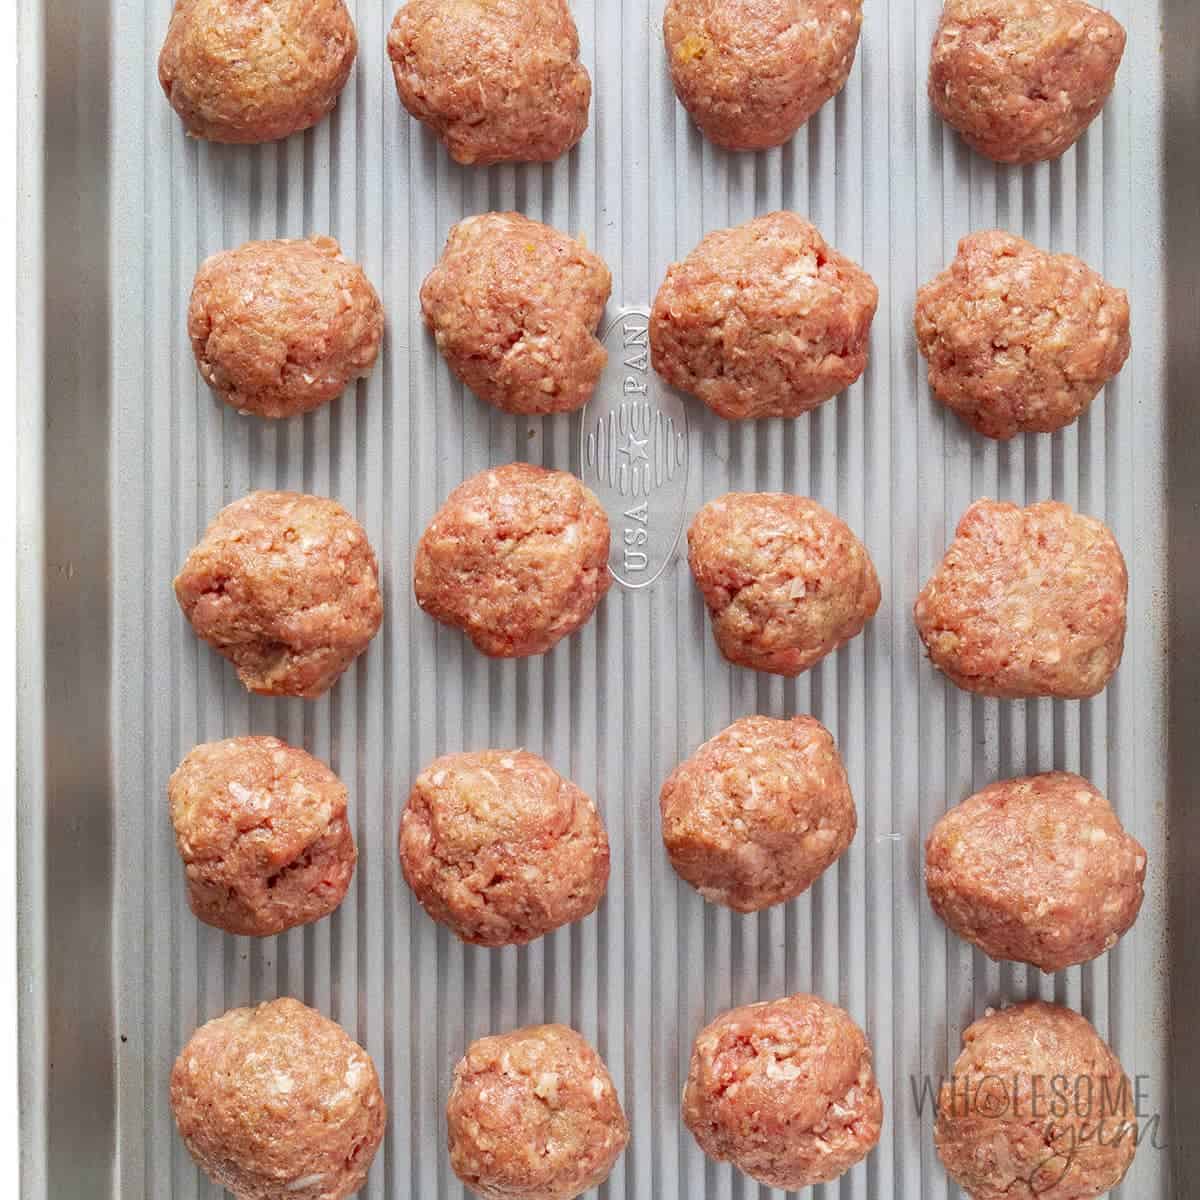 Formed meatballs on baking sheet.